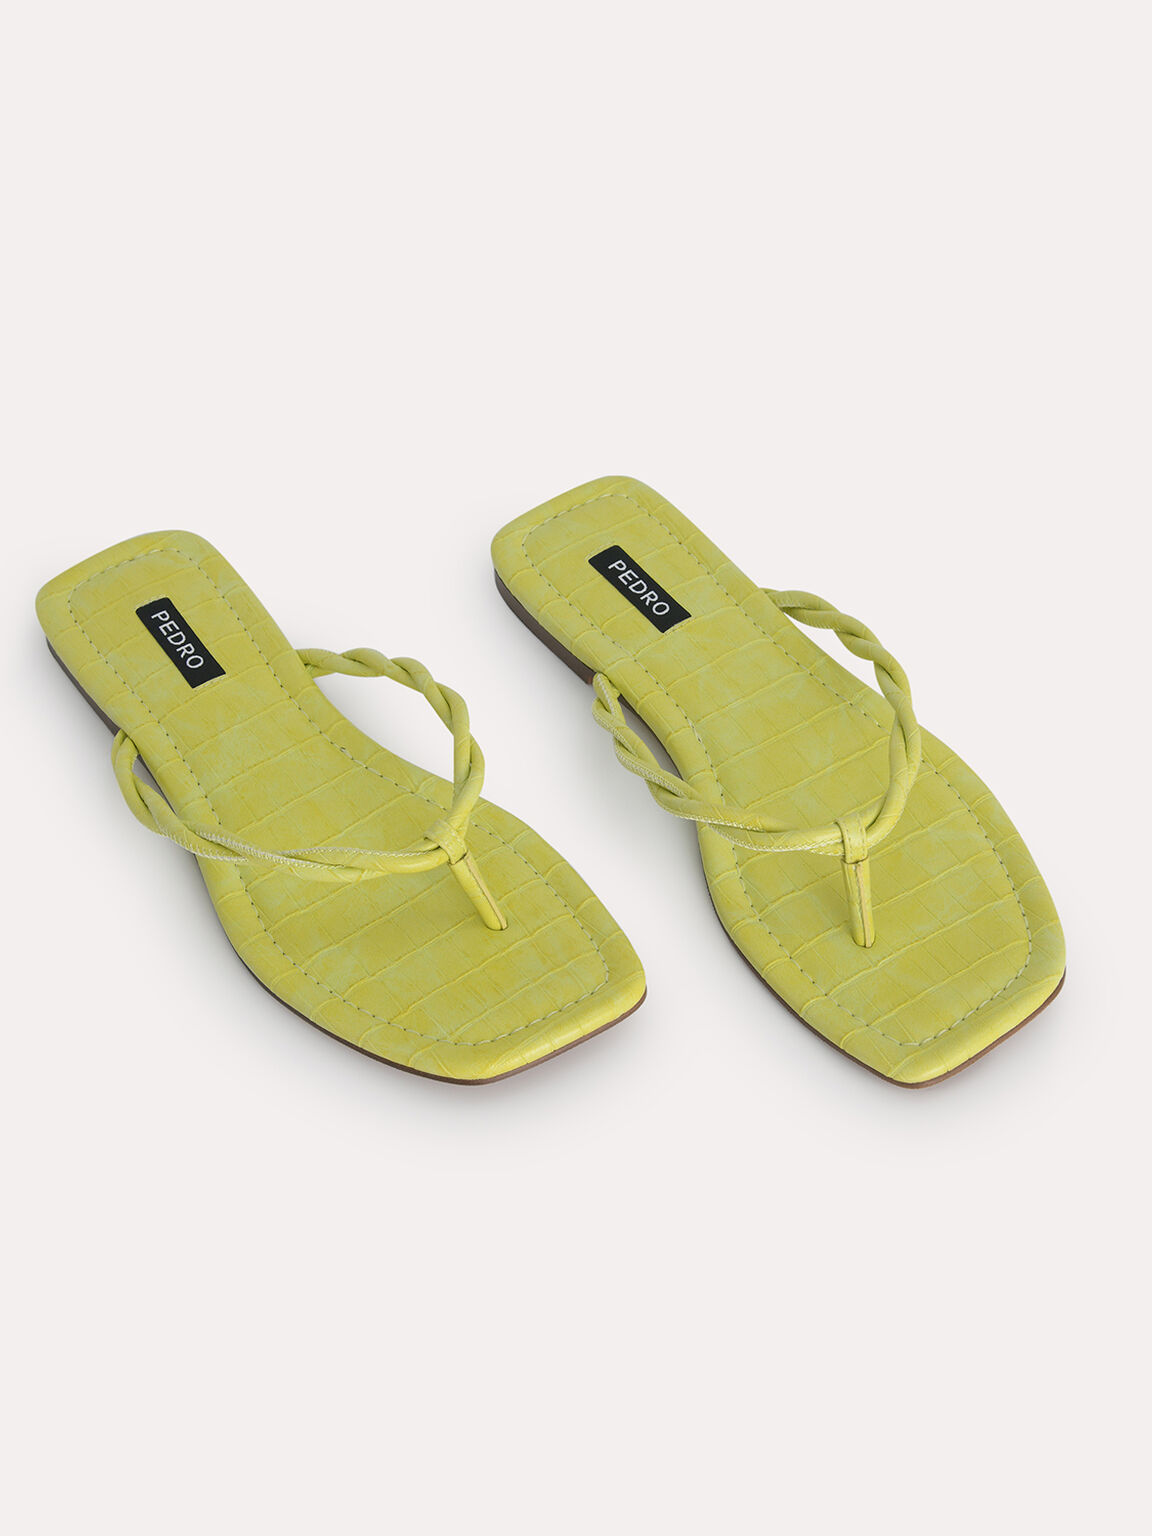 Croc-Effect Thong Sandals, Yellow, hi-res